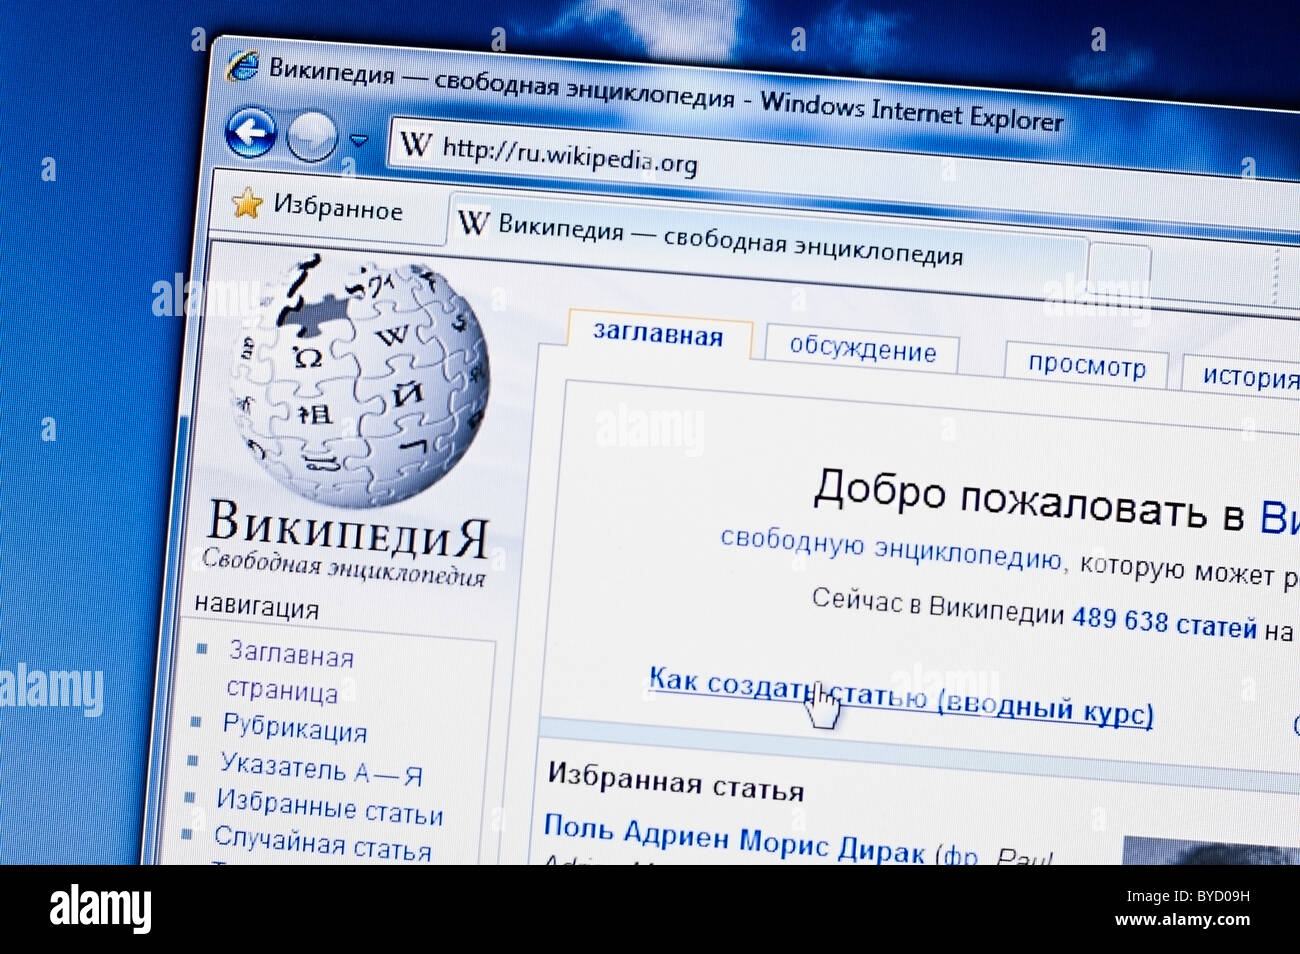 Https ru wikipedia org wiki интернет